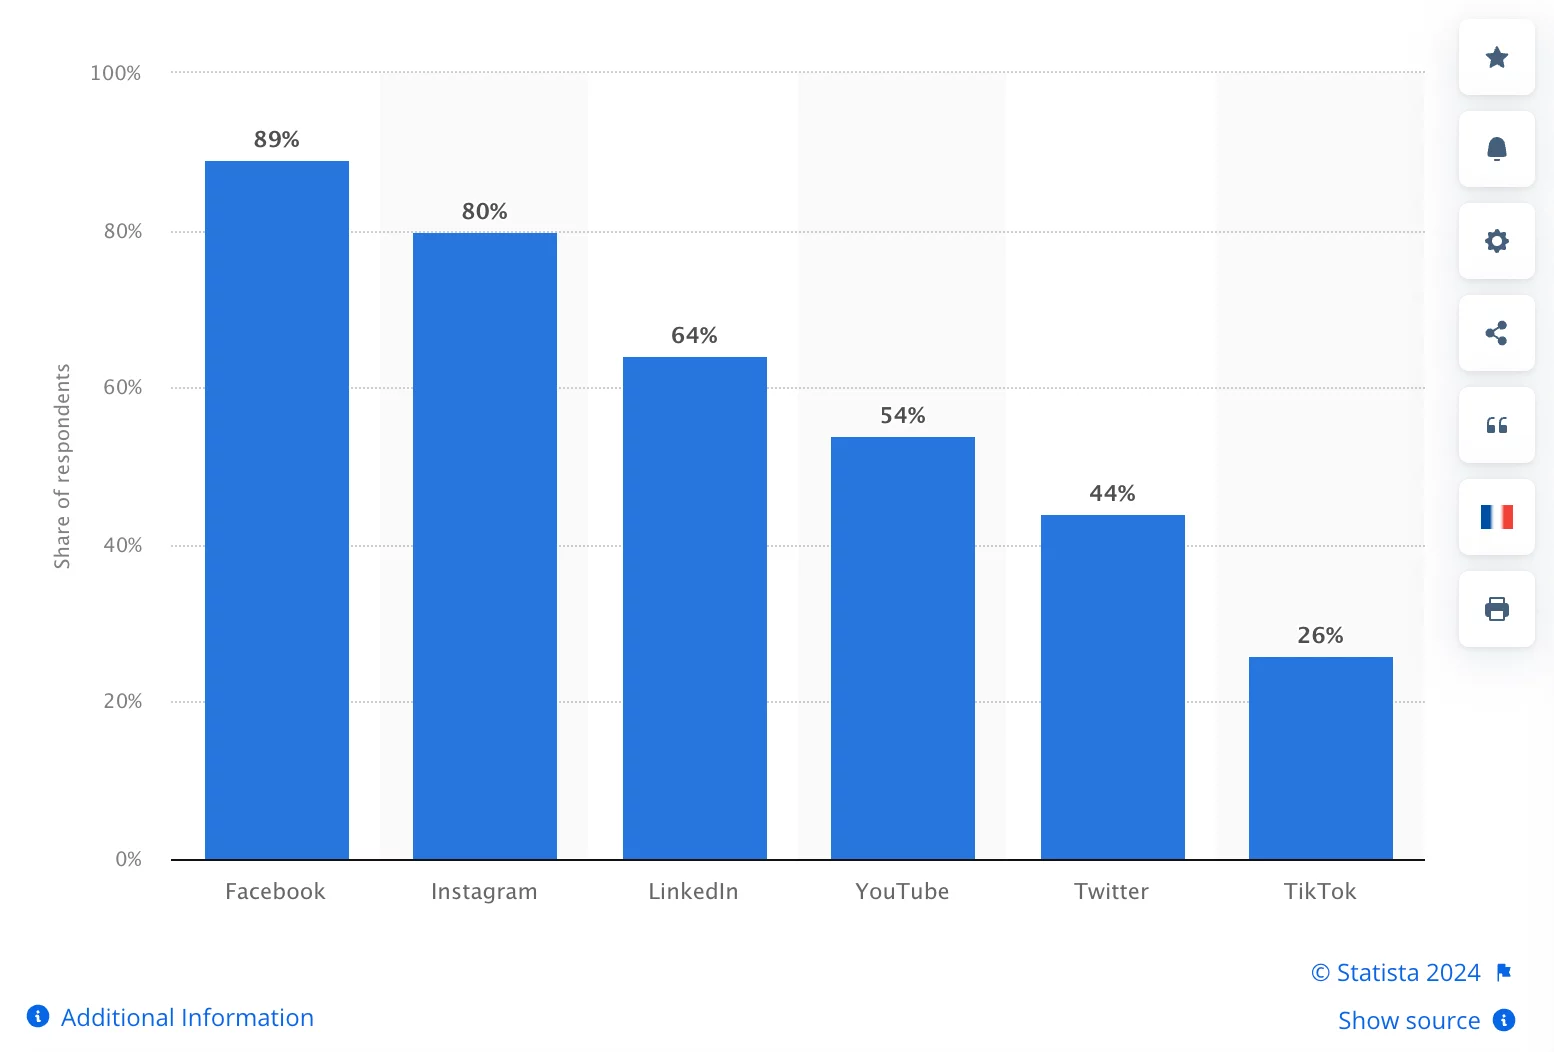 Statista 2024's bar chart showing the percentage of respondents using social media platforms: Facebook 89%, Instagram 80%, LinkedIn 64%, YouTube 54%, Twitter 44%, TikTok 26%.